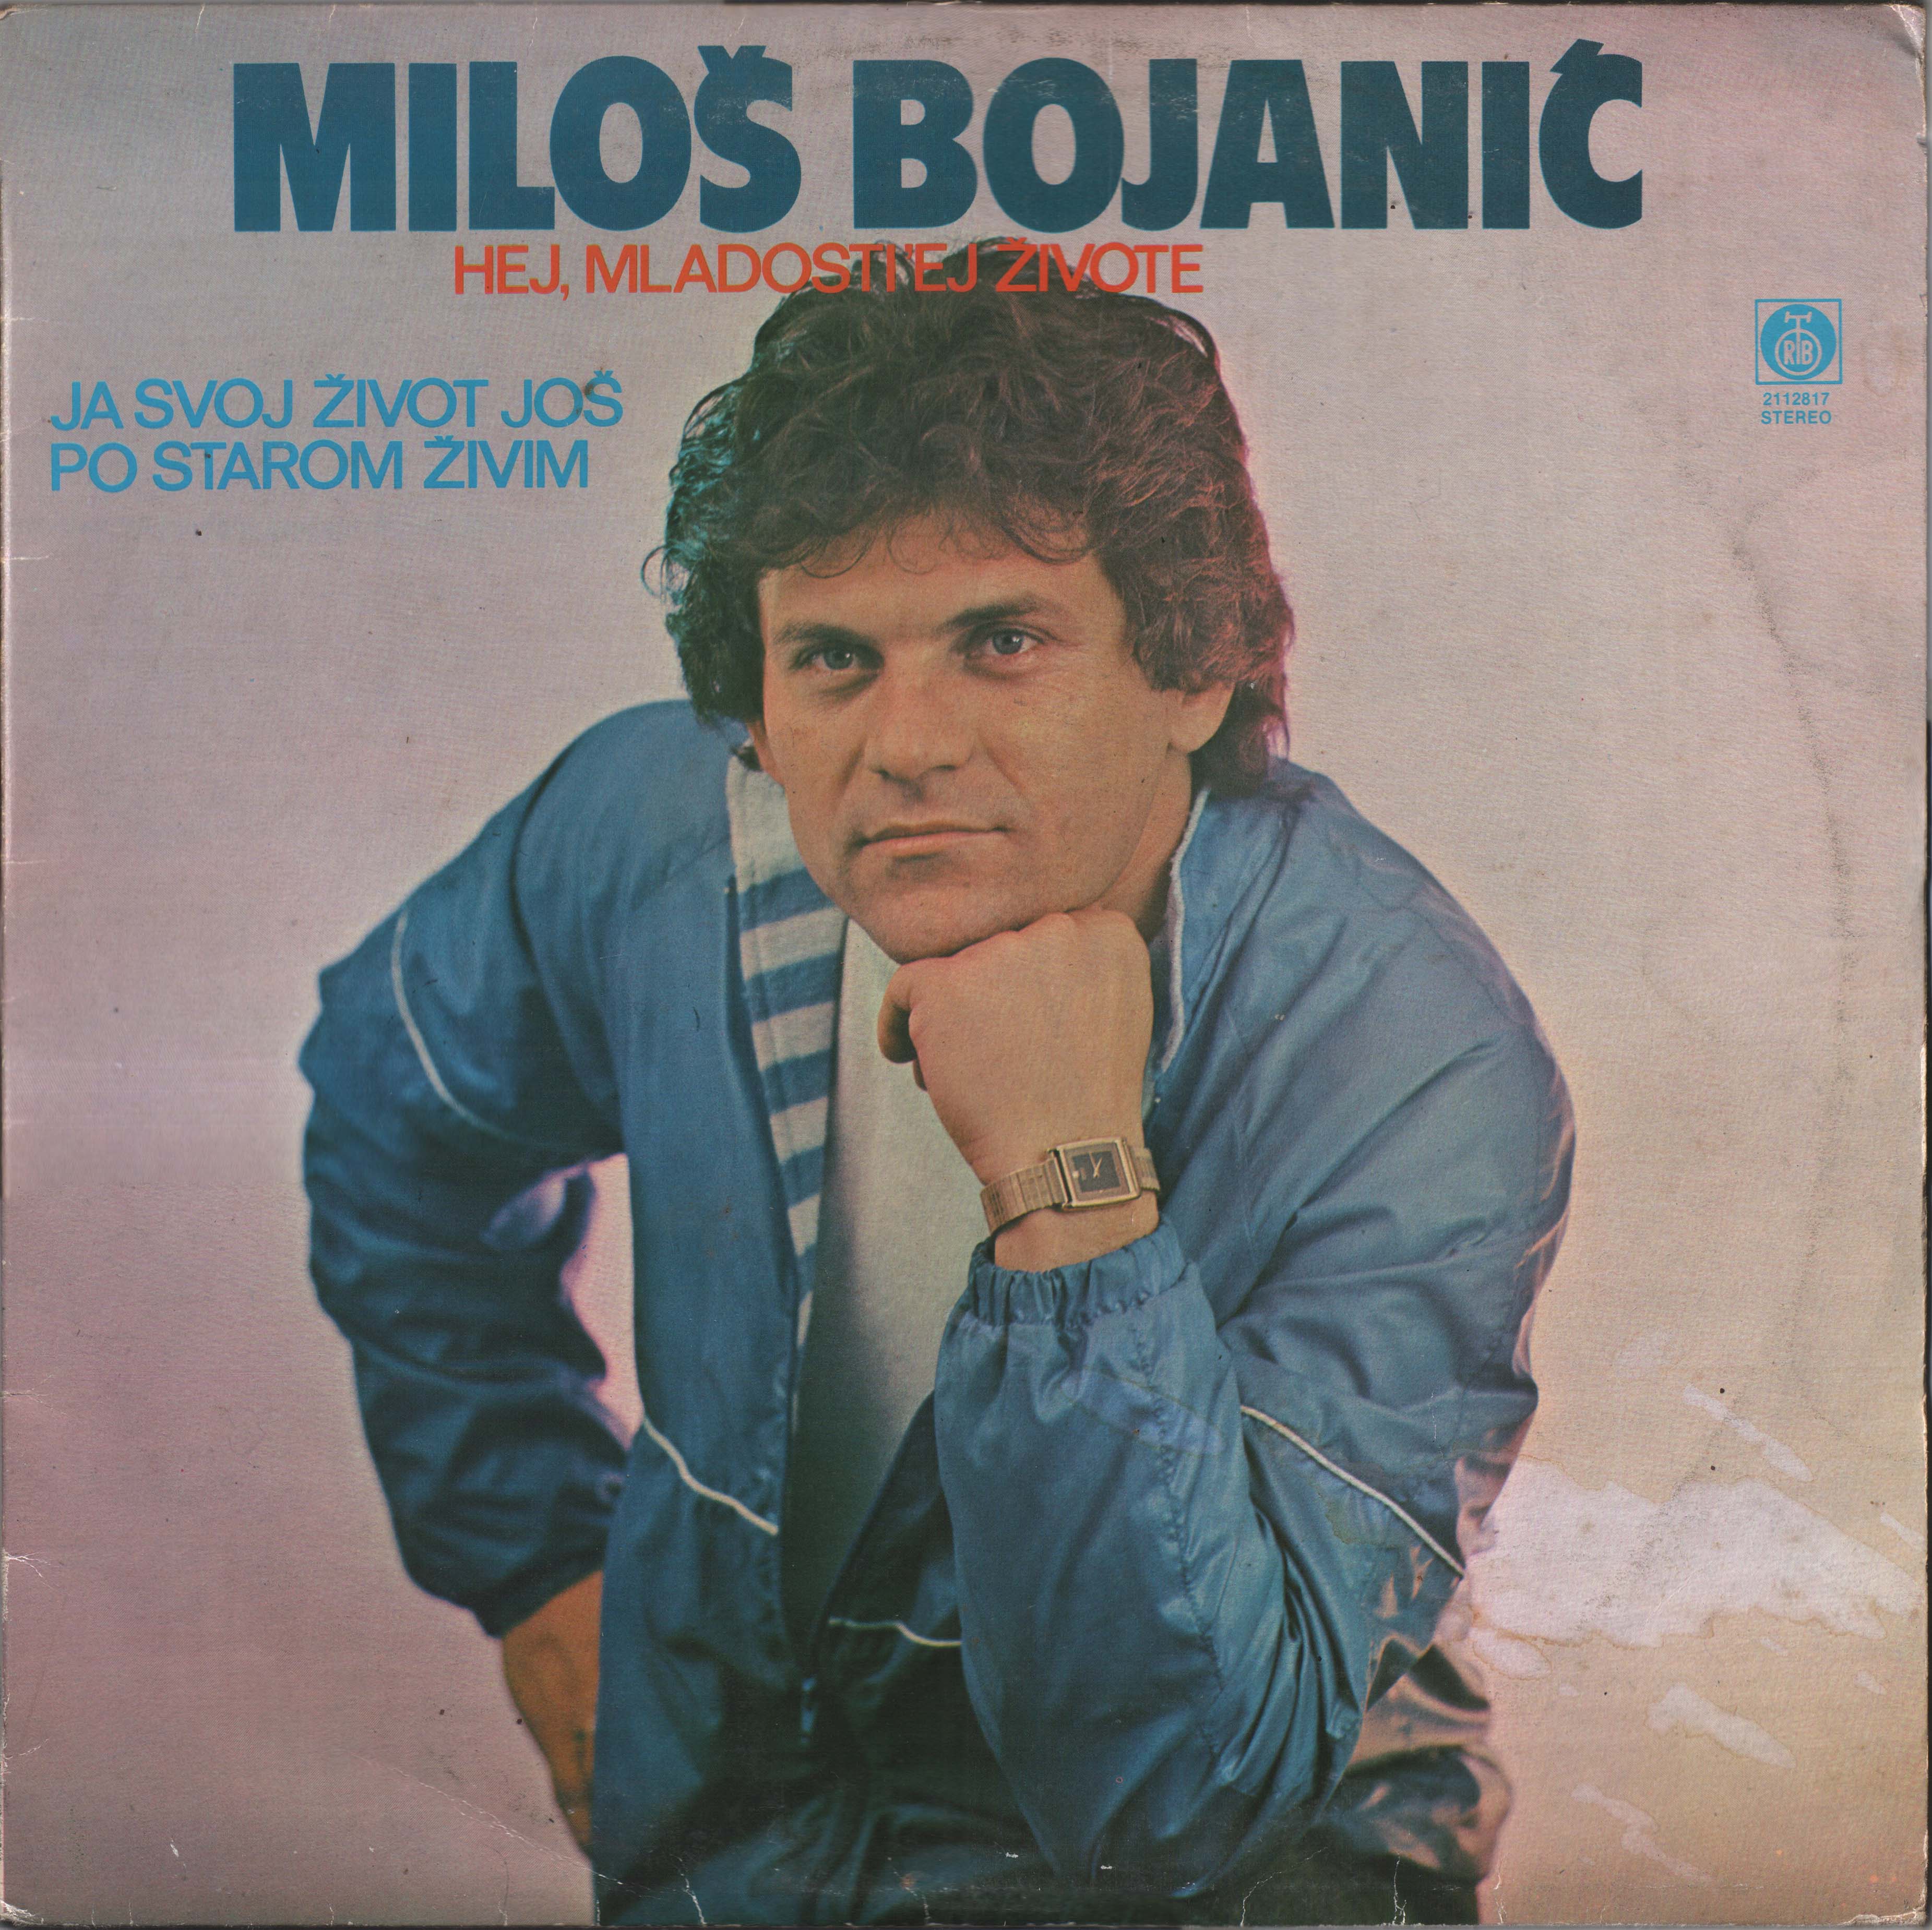 Milos Bojanic 1984 P